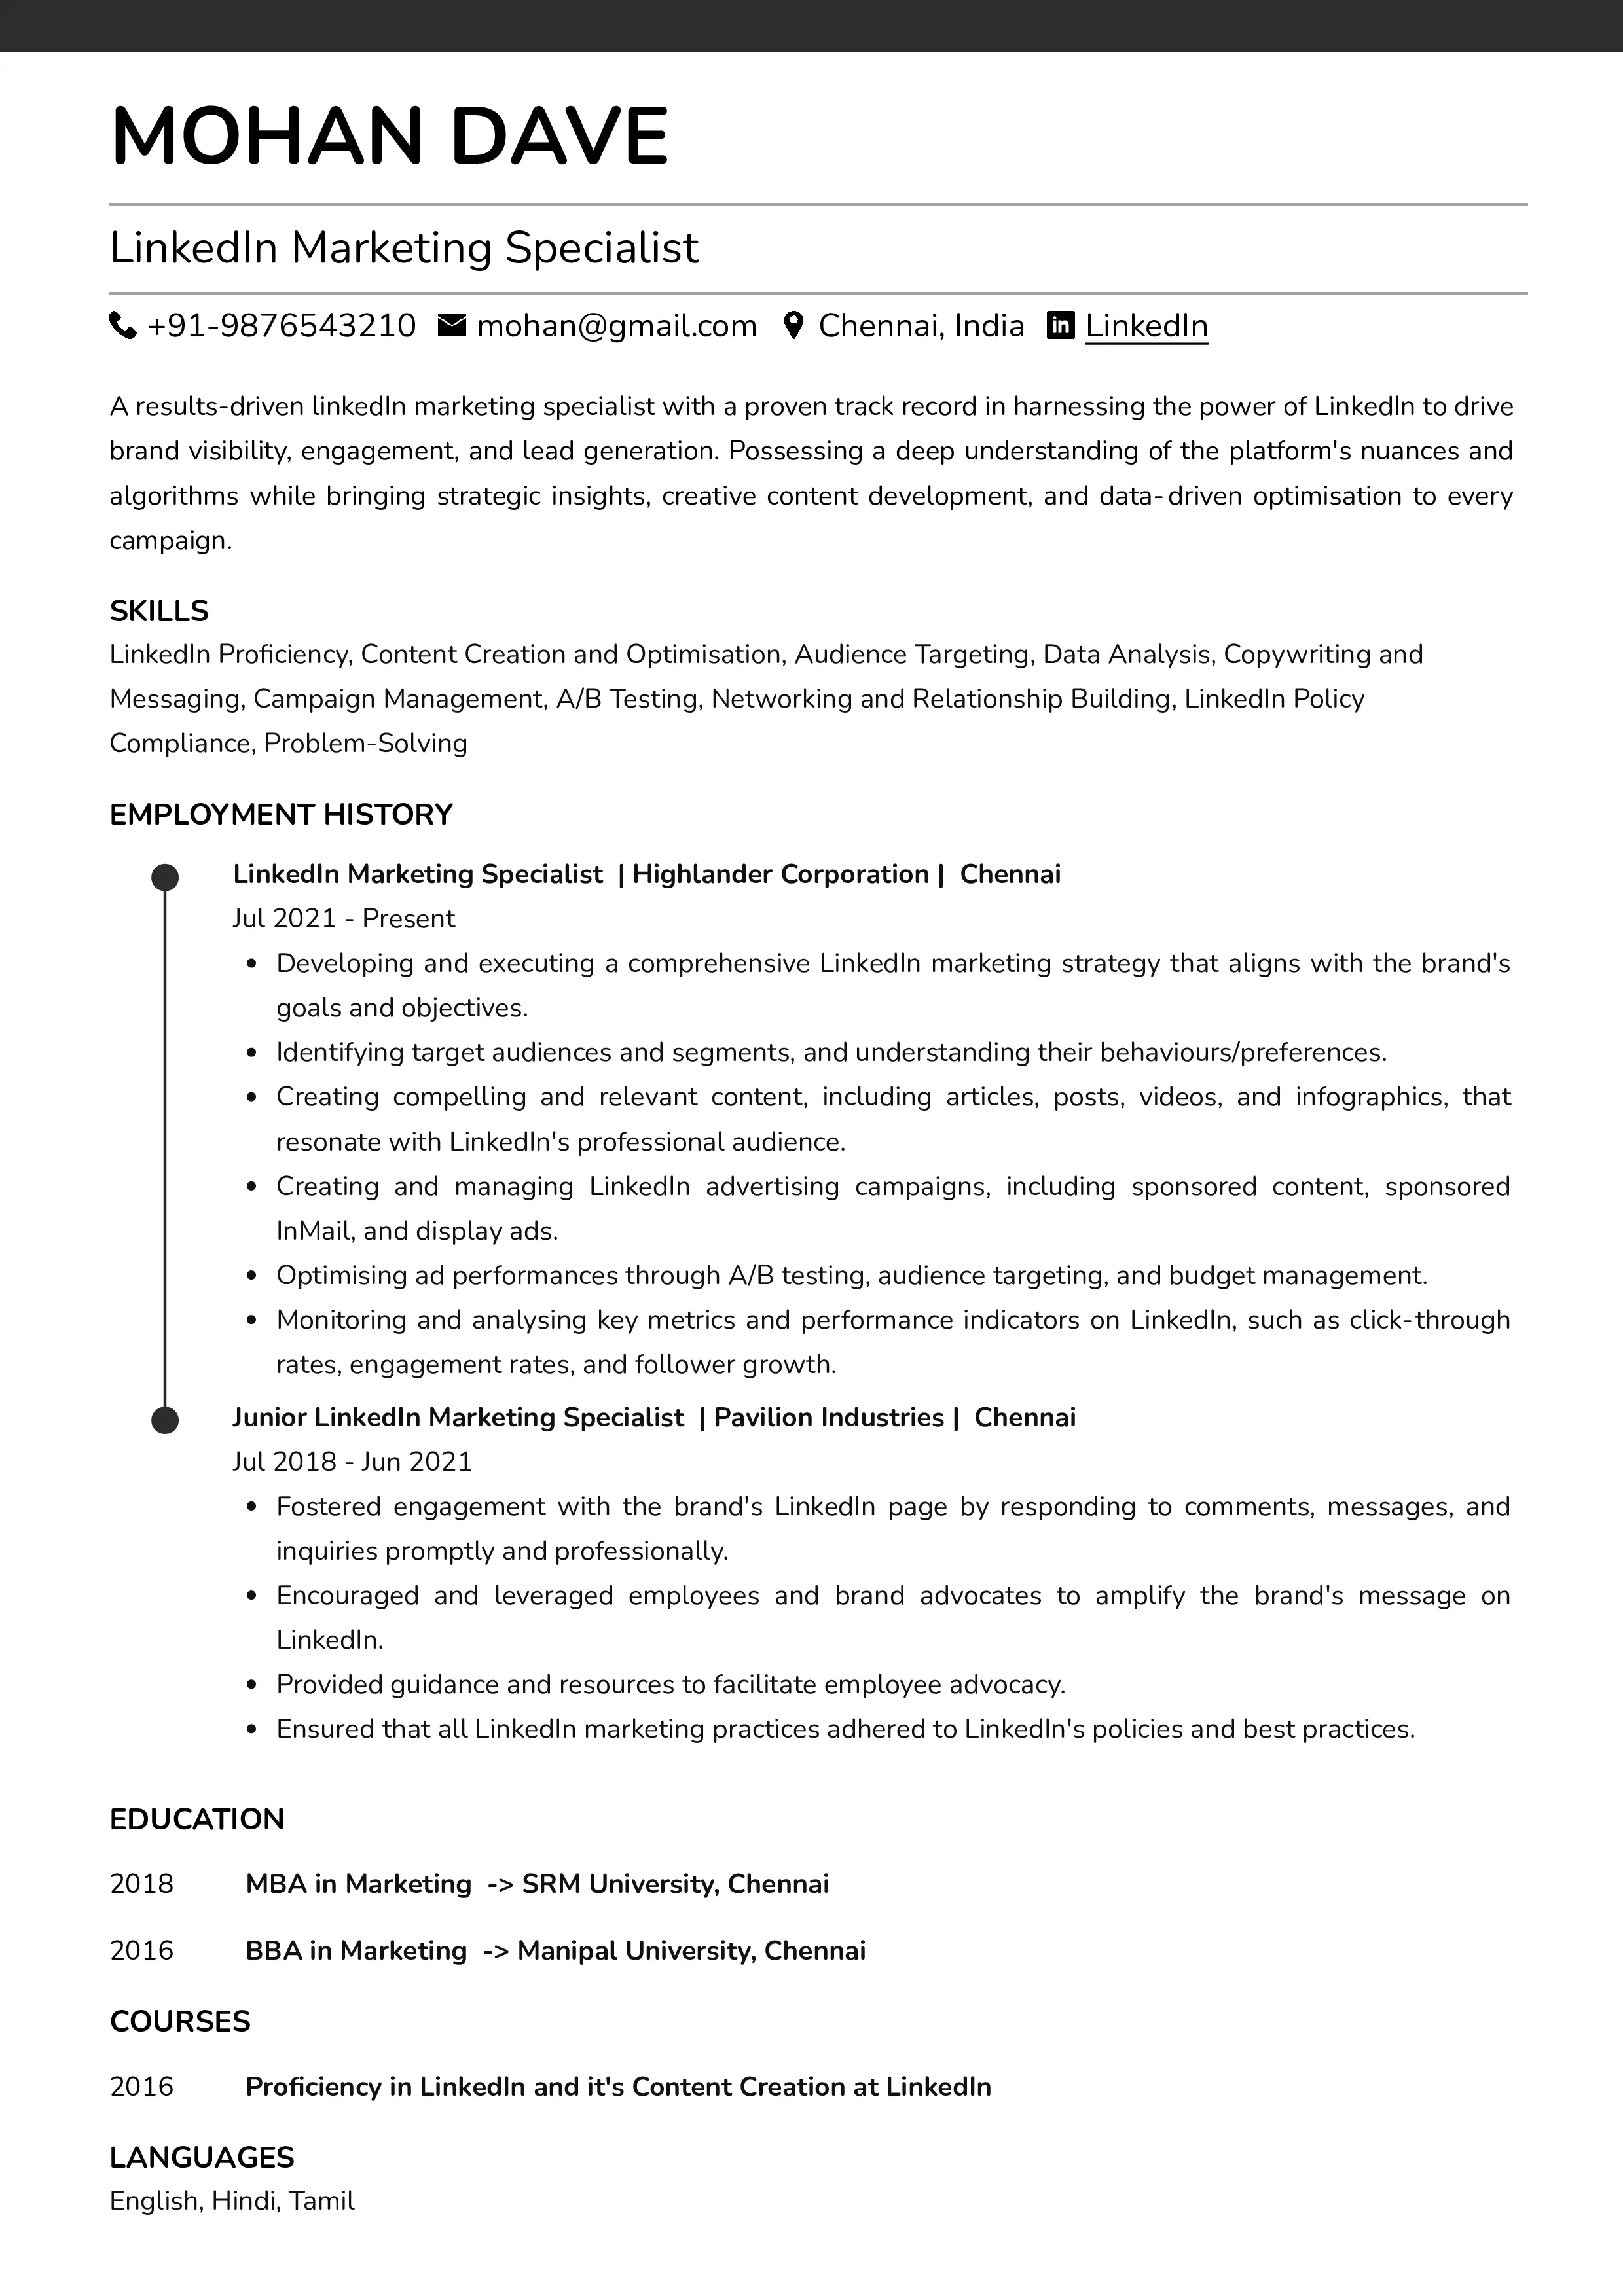 Sample Resume of LinkedIn Marketing Specialist | Free Resume Templates & Samples on Resumod.co